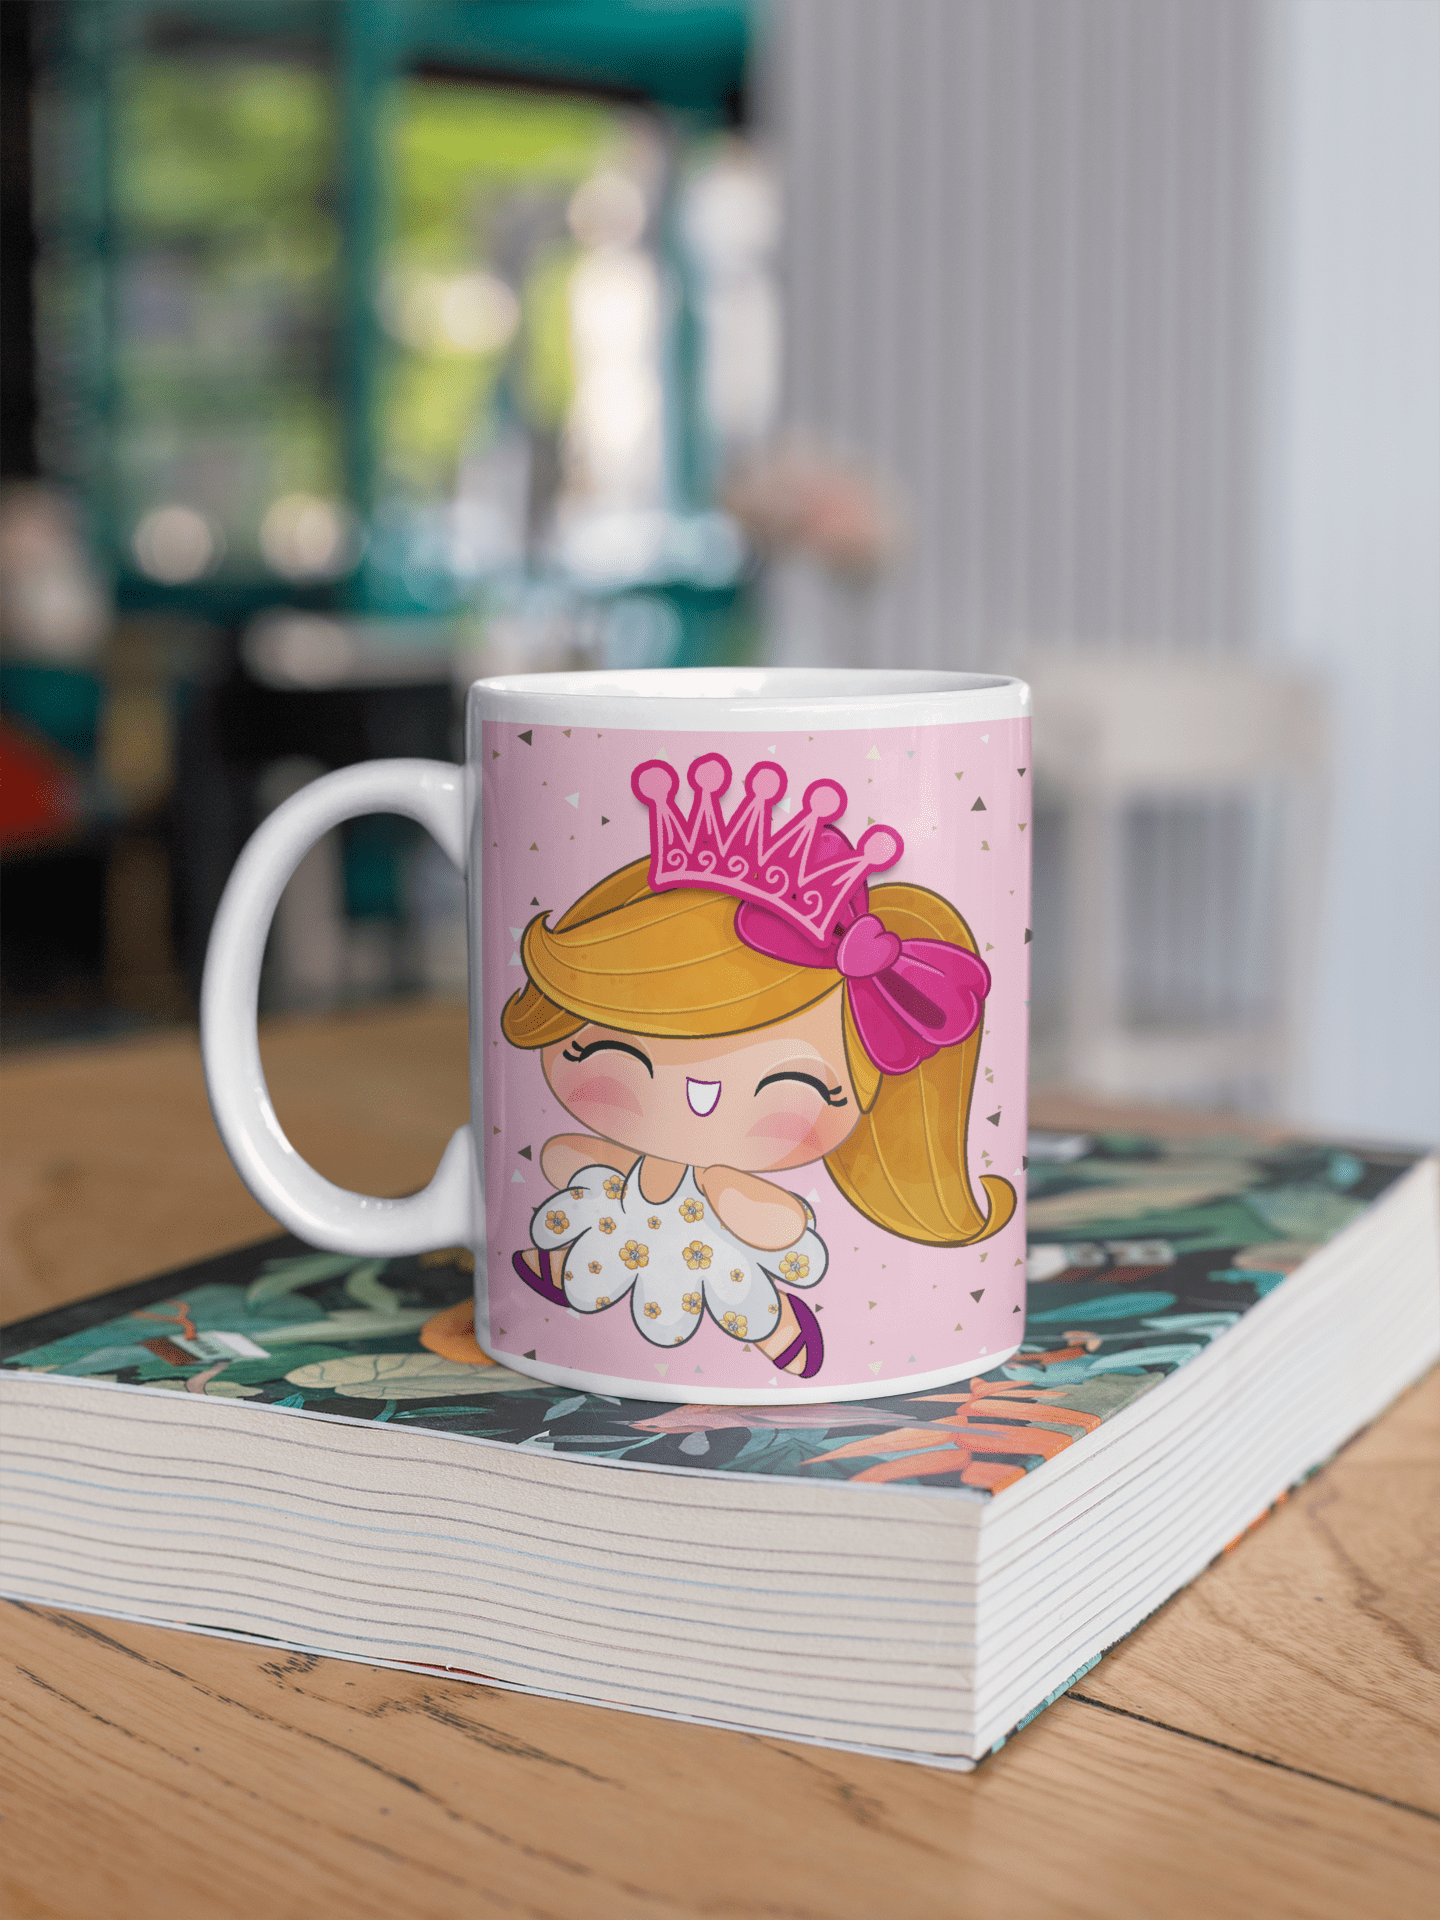 Baby queen printed coffee mug